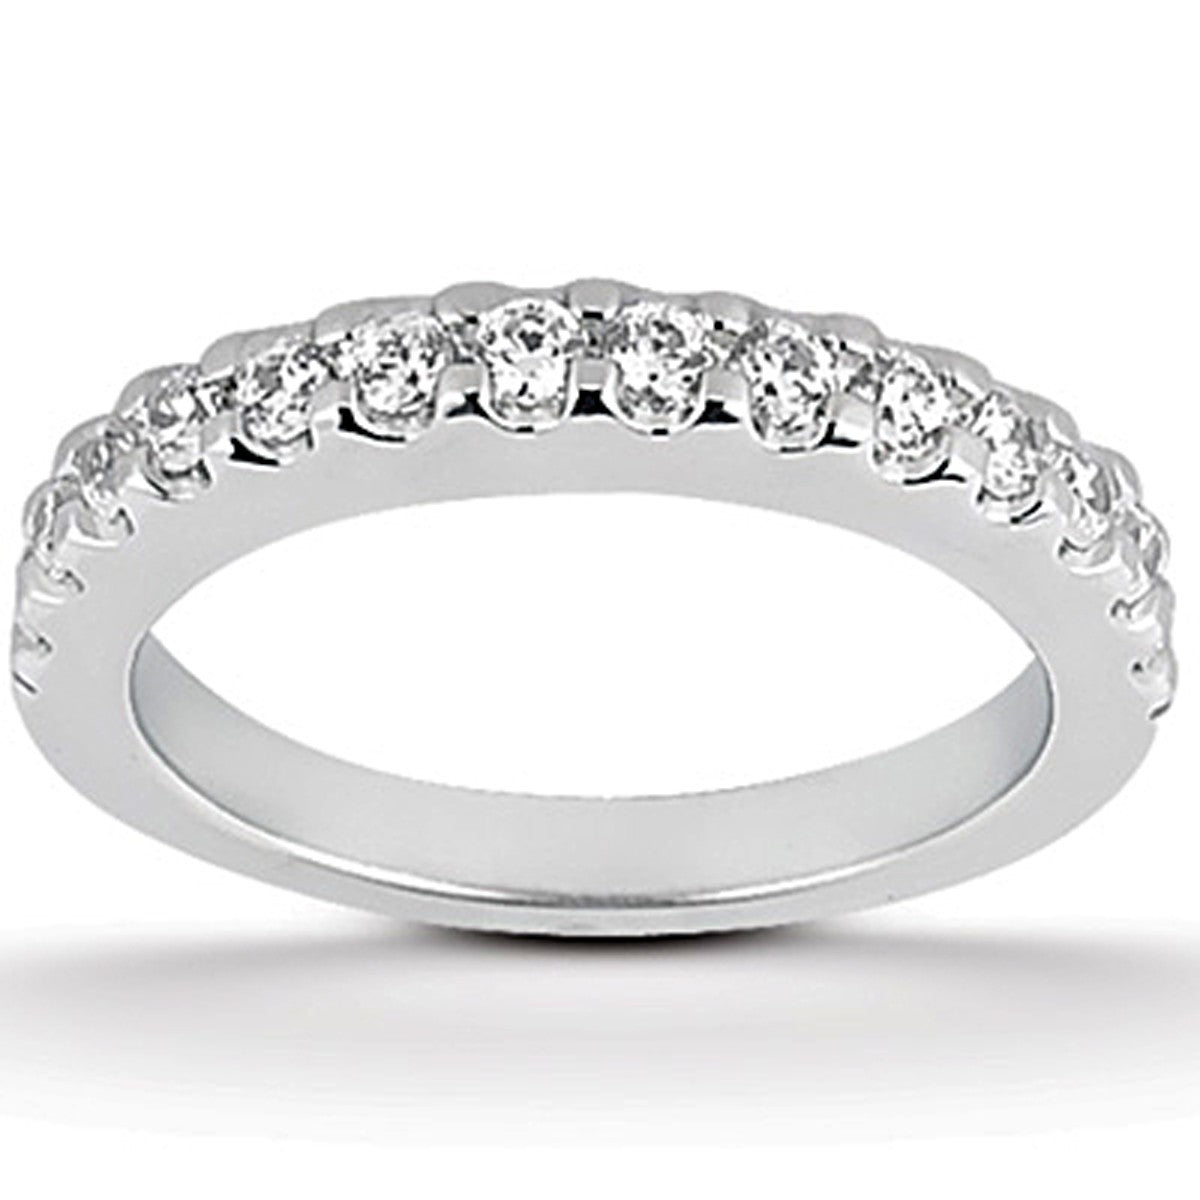 14k White Gold Shared Prong Diamond Wedding Ring Band